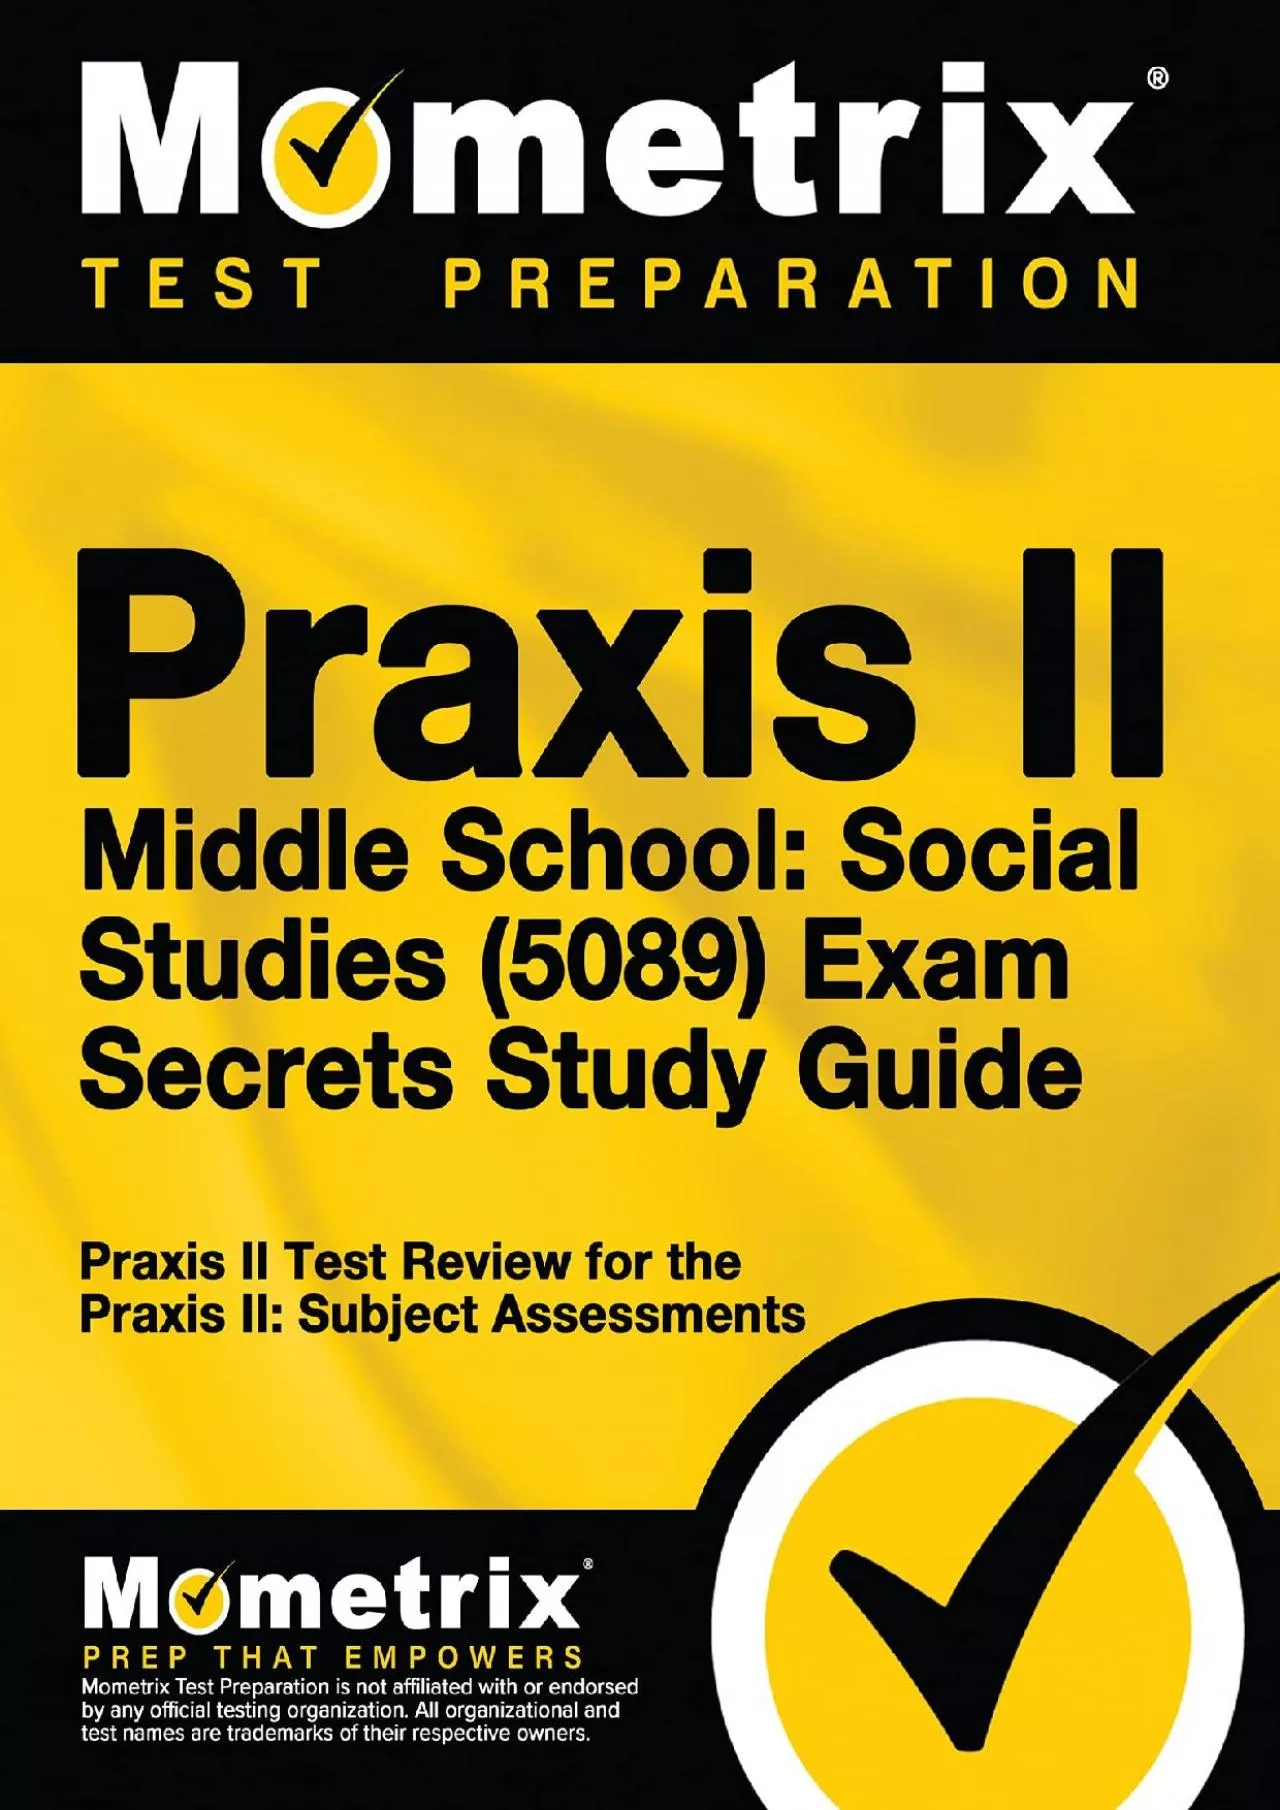 [READ] Praxis II Middle School: Social Studies 5089 Exam Secrets Study Guide: Praxis II